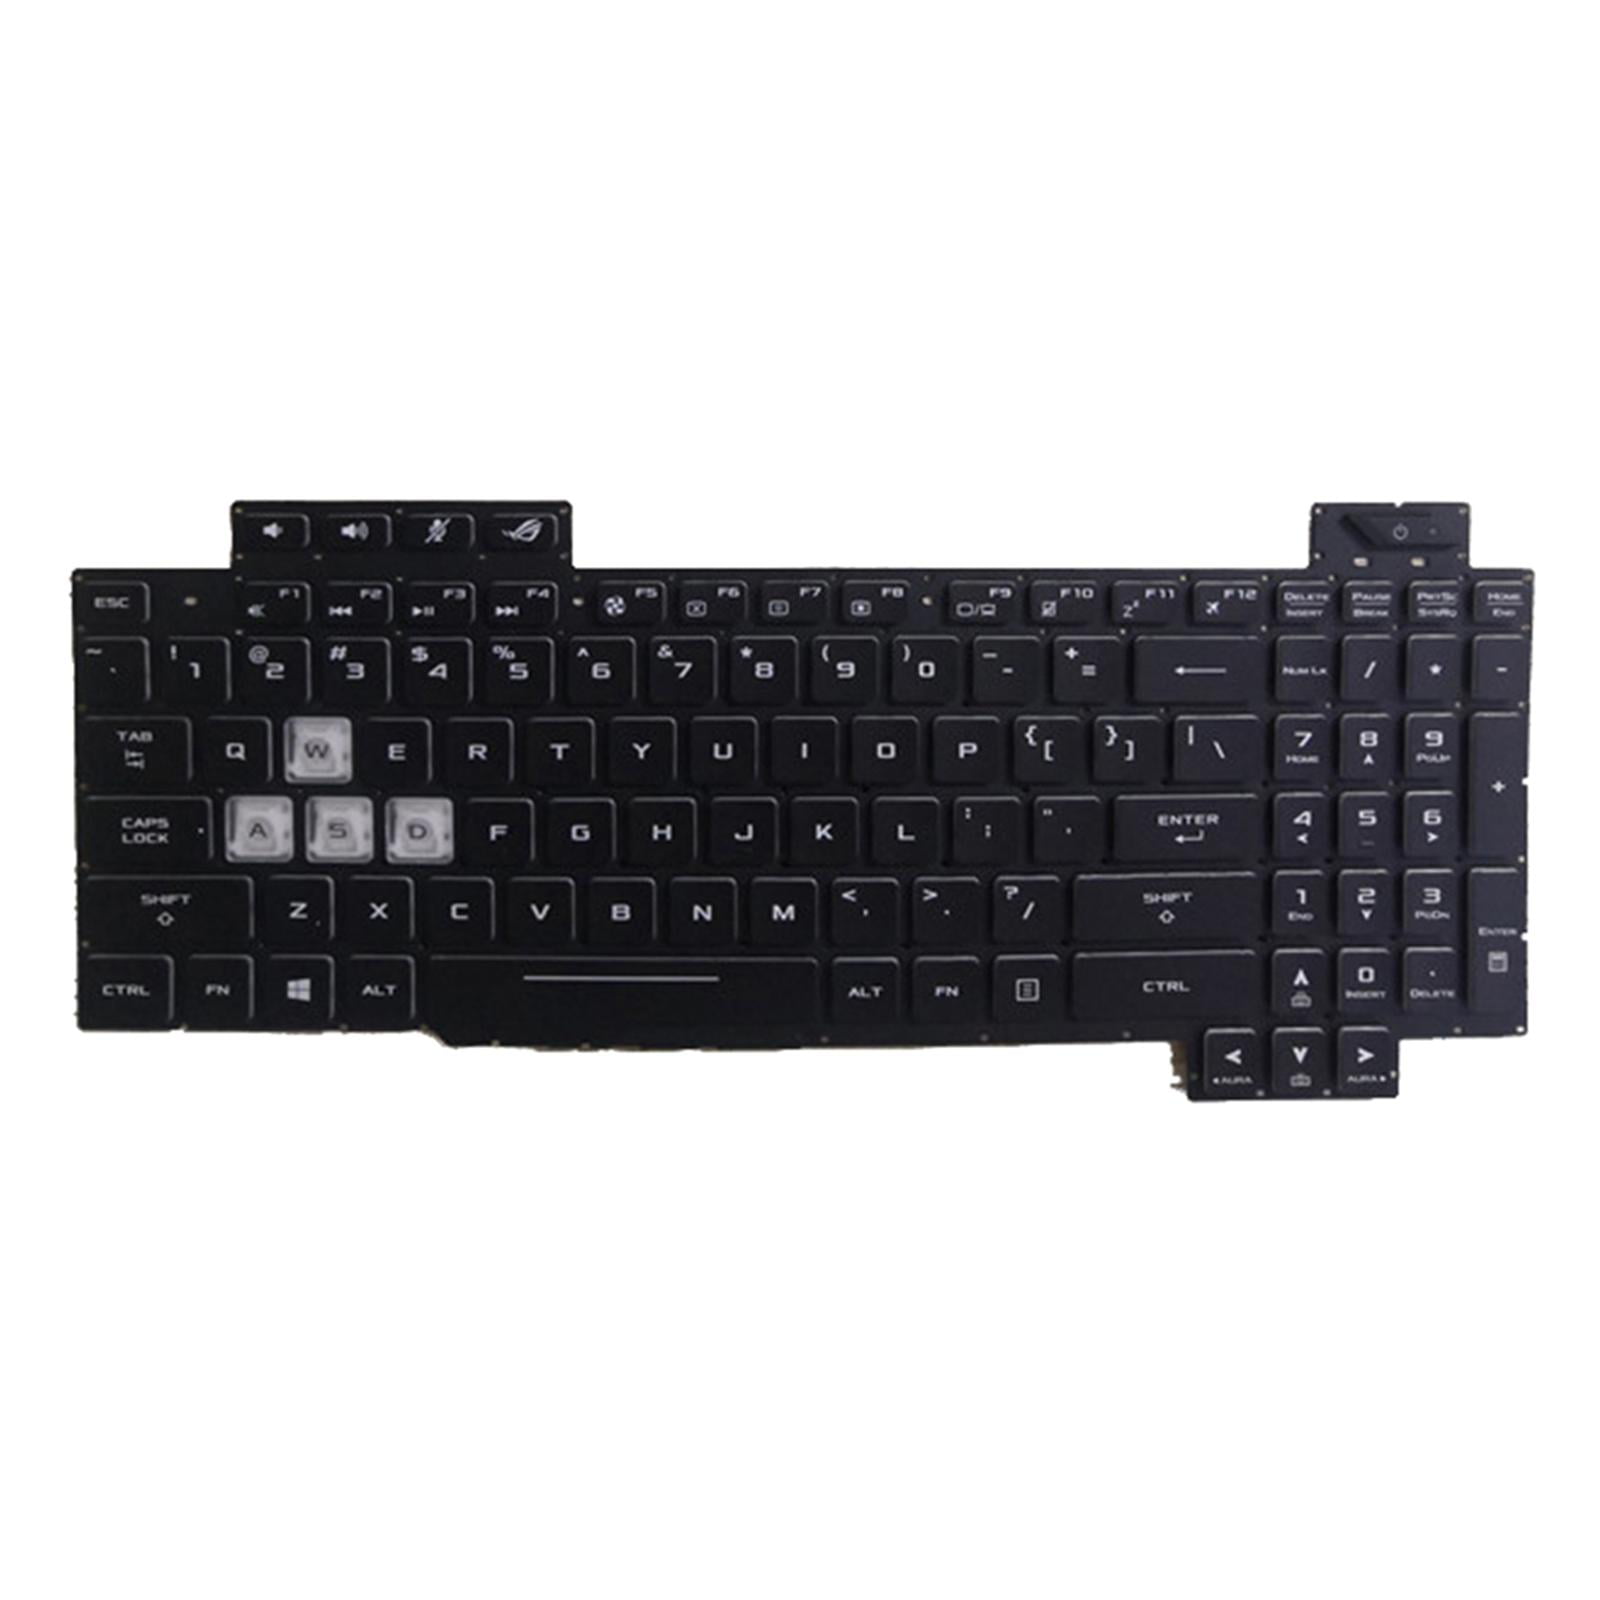 NEW For MSI GT60 GT70 GE70 GE60 MS-1762 Keyboard Full RGB Backlit USA V139922AK1 